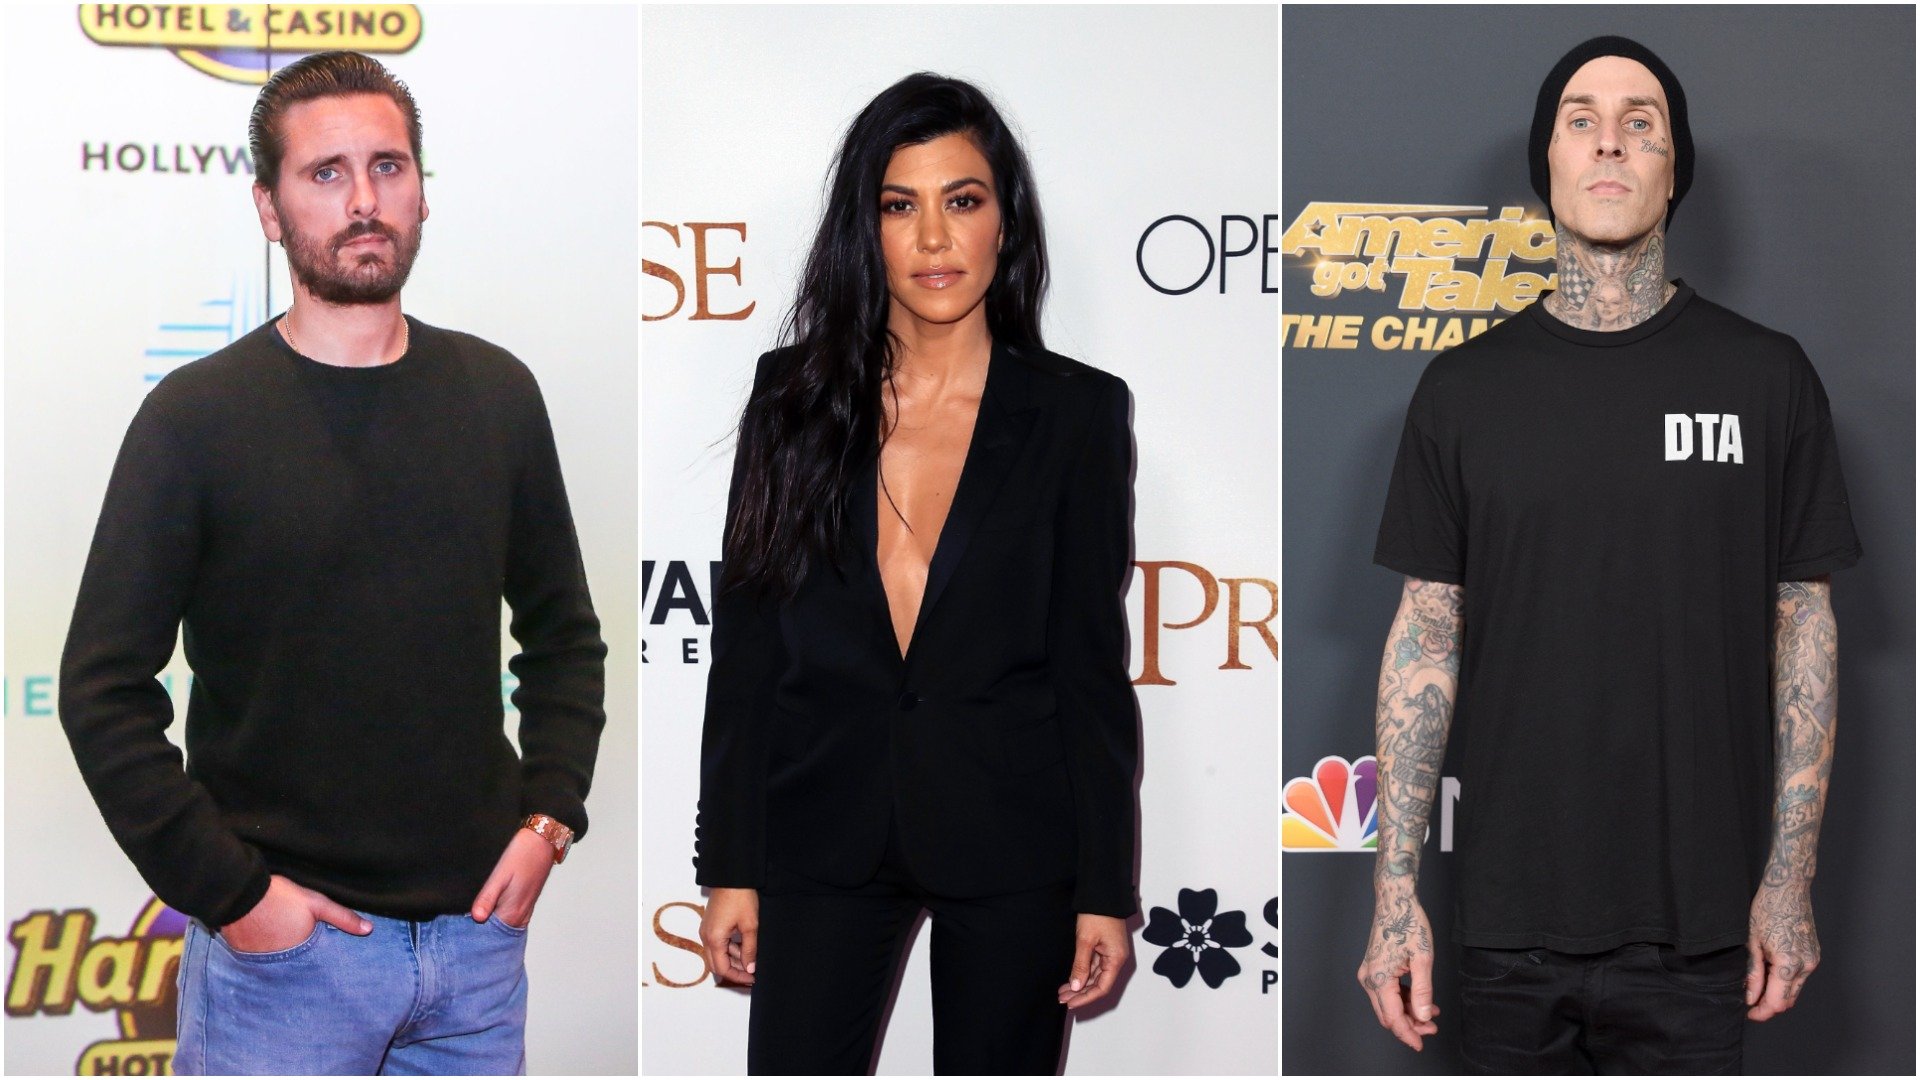 A collage image of Scott Disick, Kourtney Kardashian, and Travis Barker